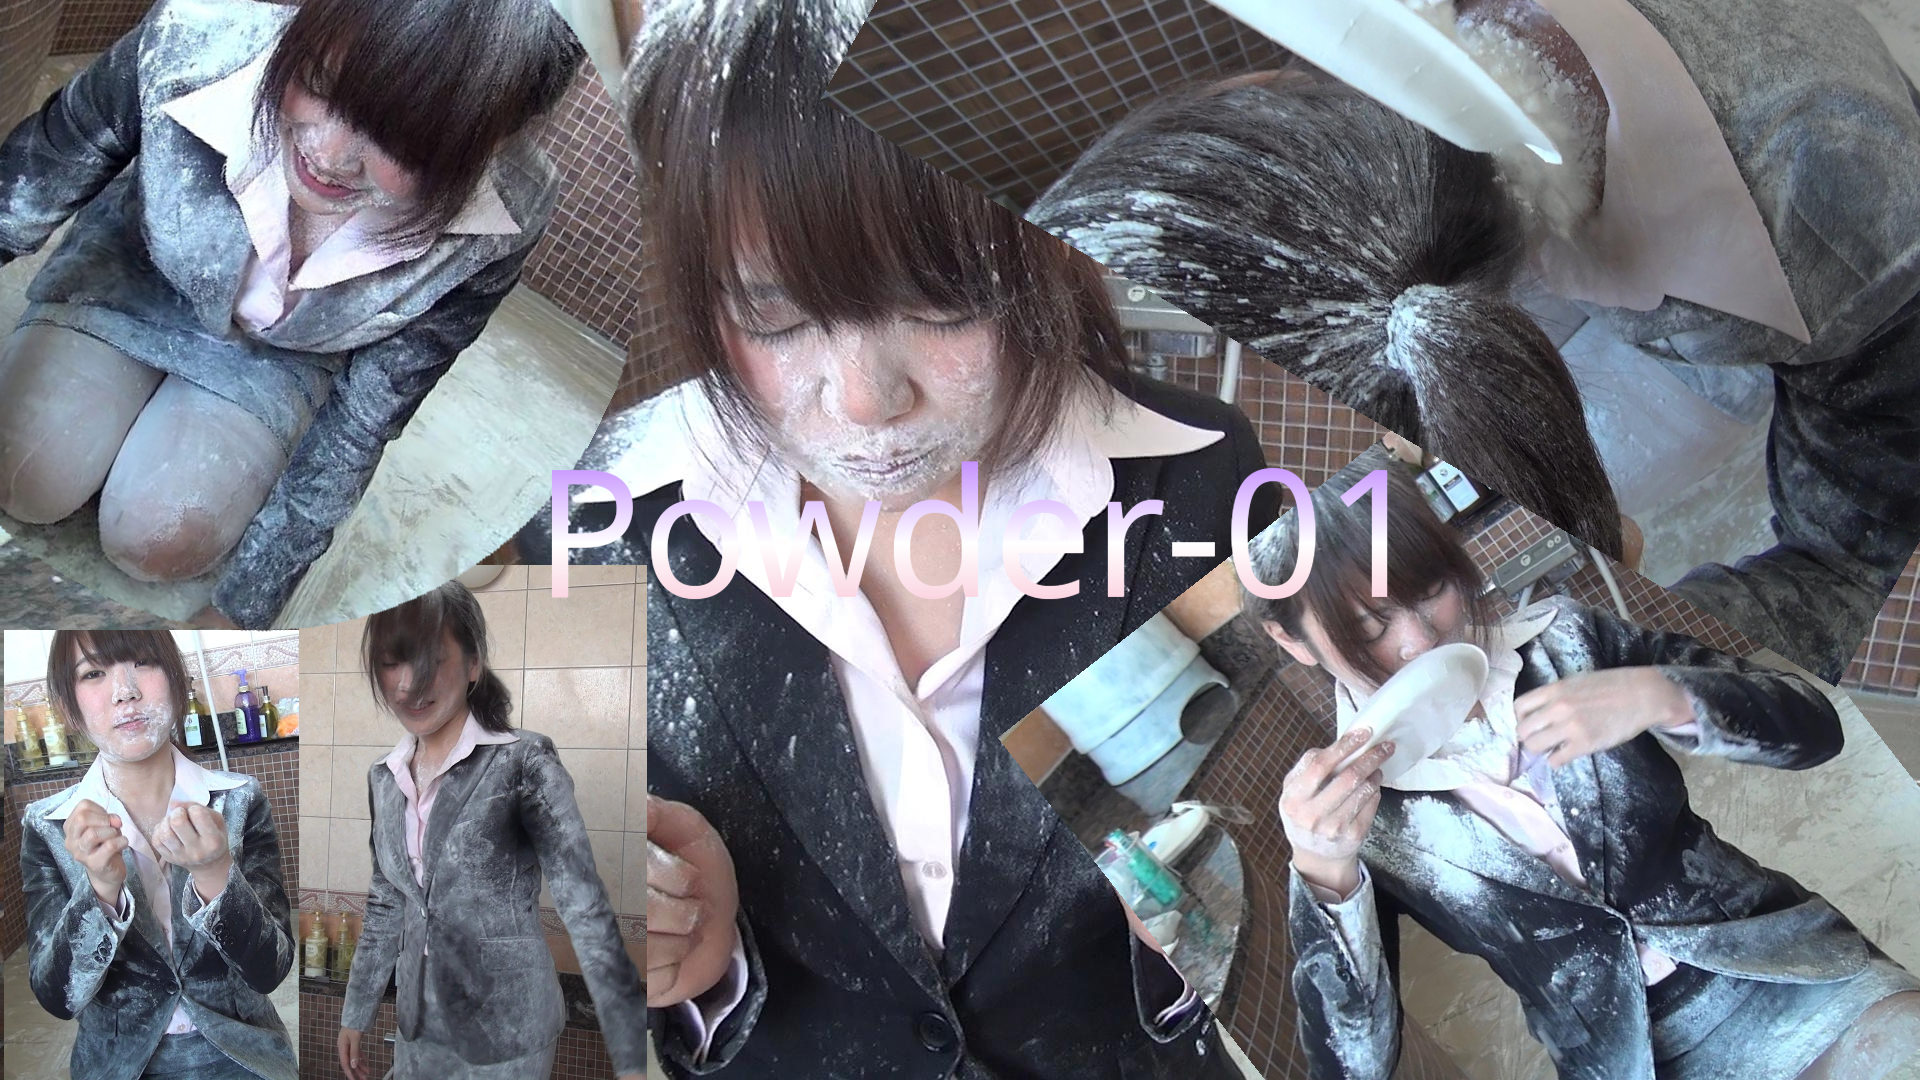 [Messy] Powder-01